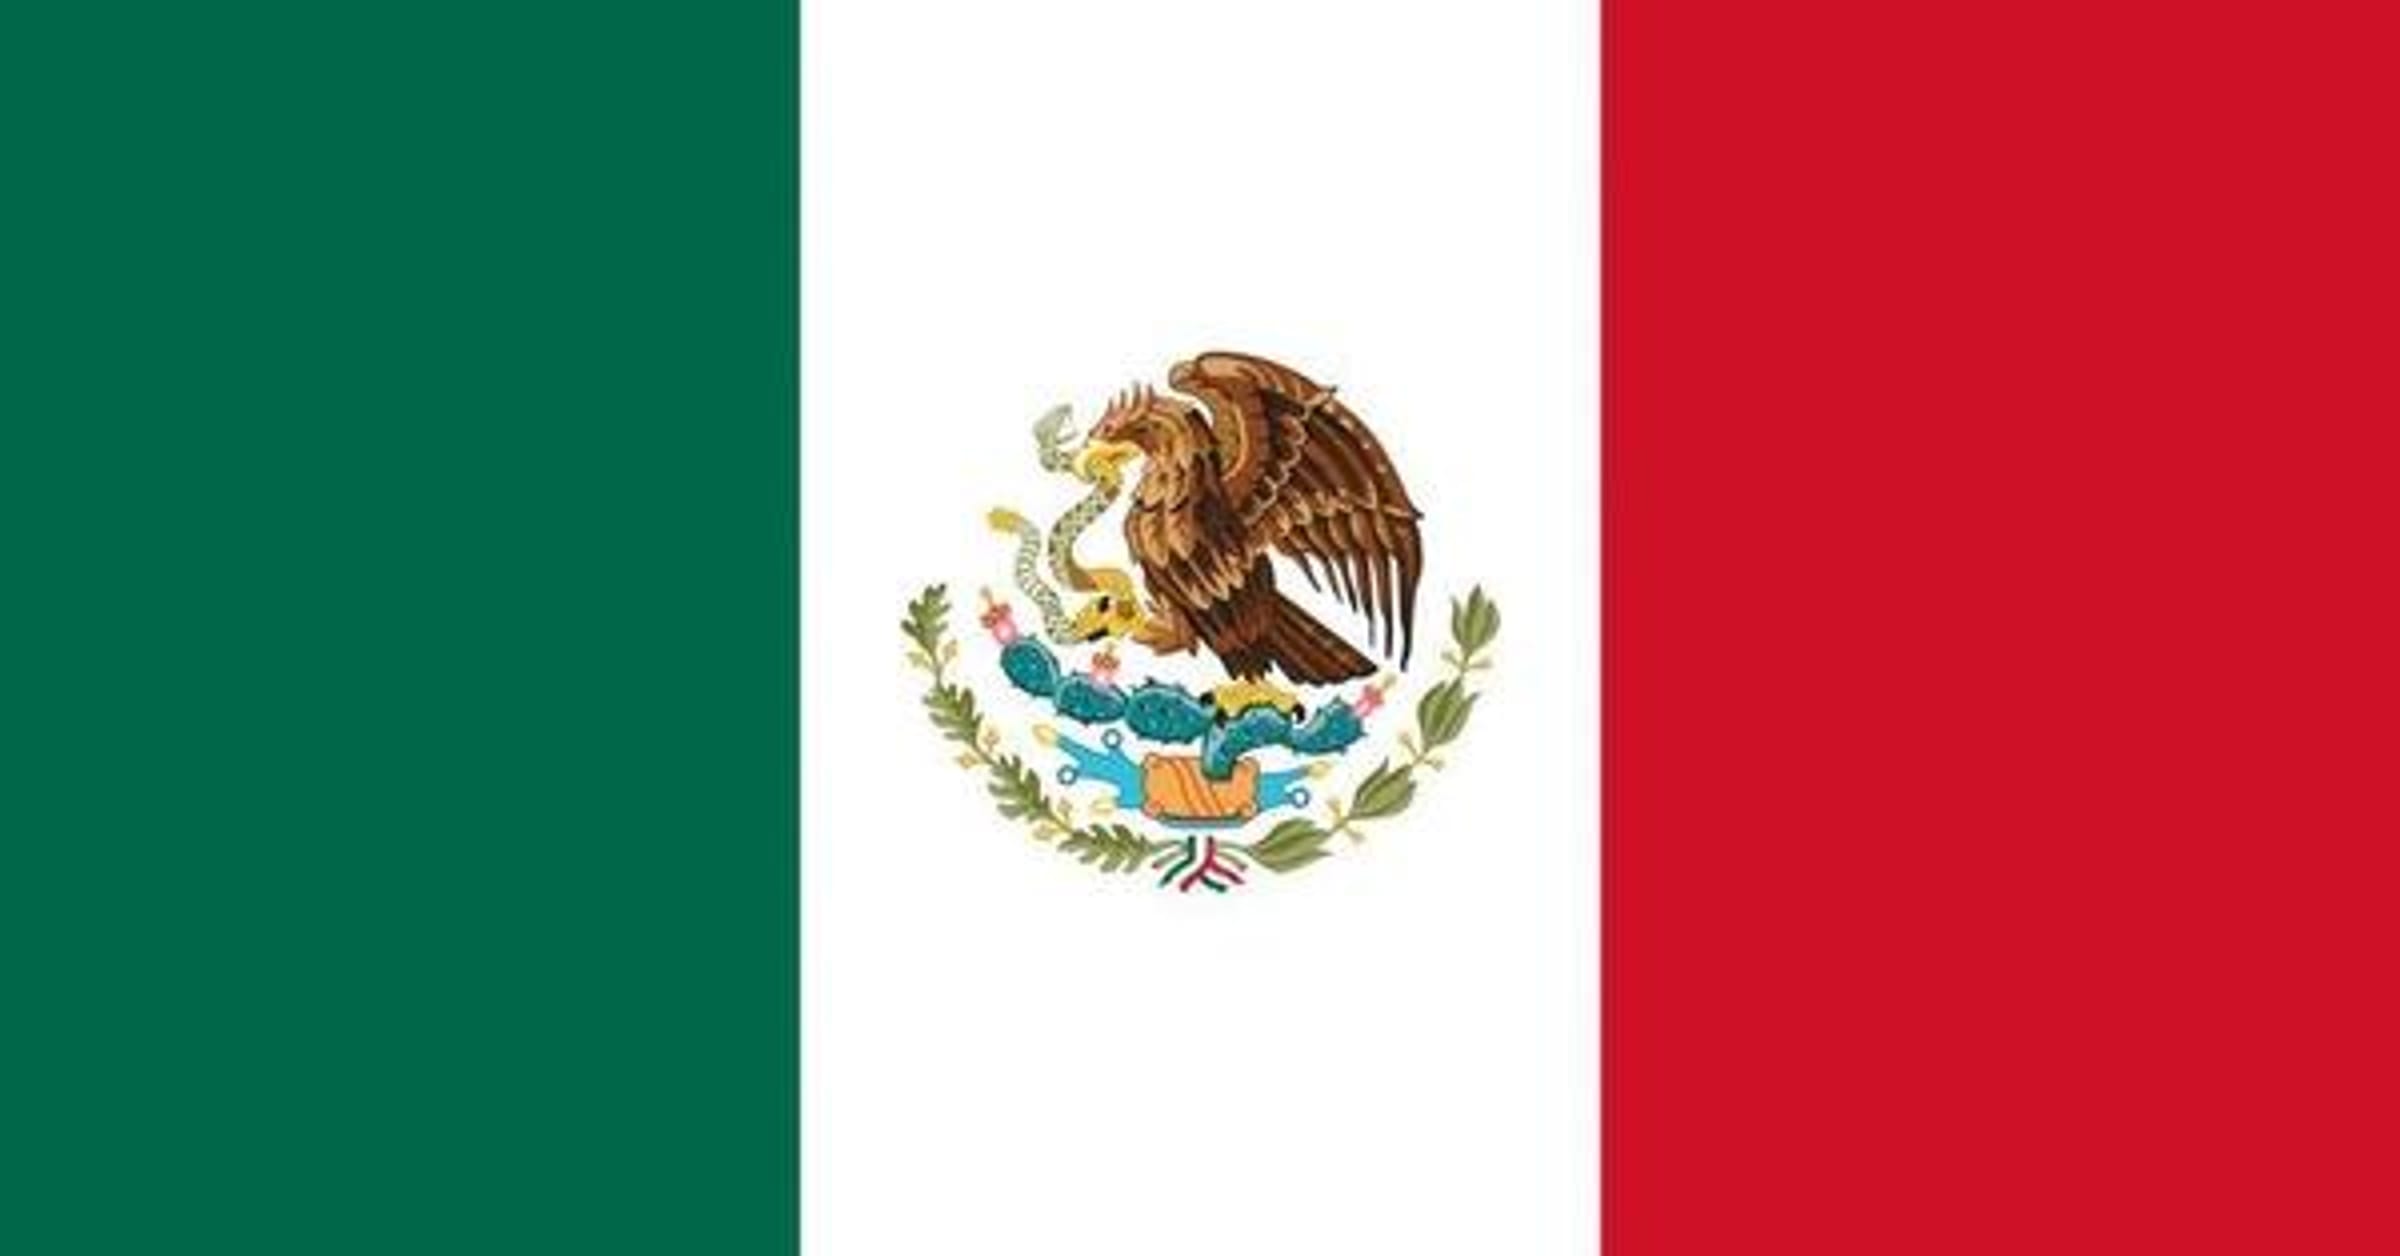 Emblems of Mexican Football Championship - Mexican Primera